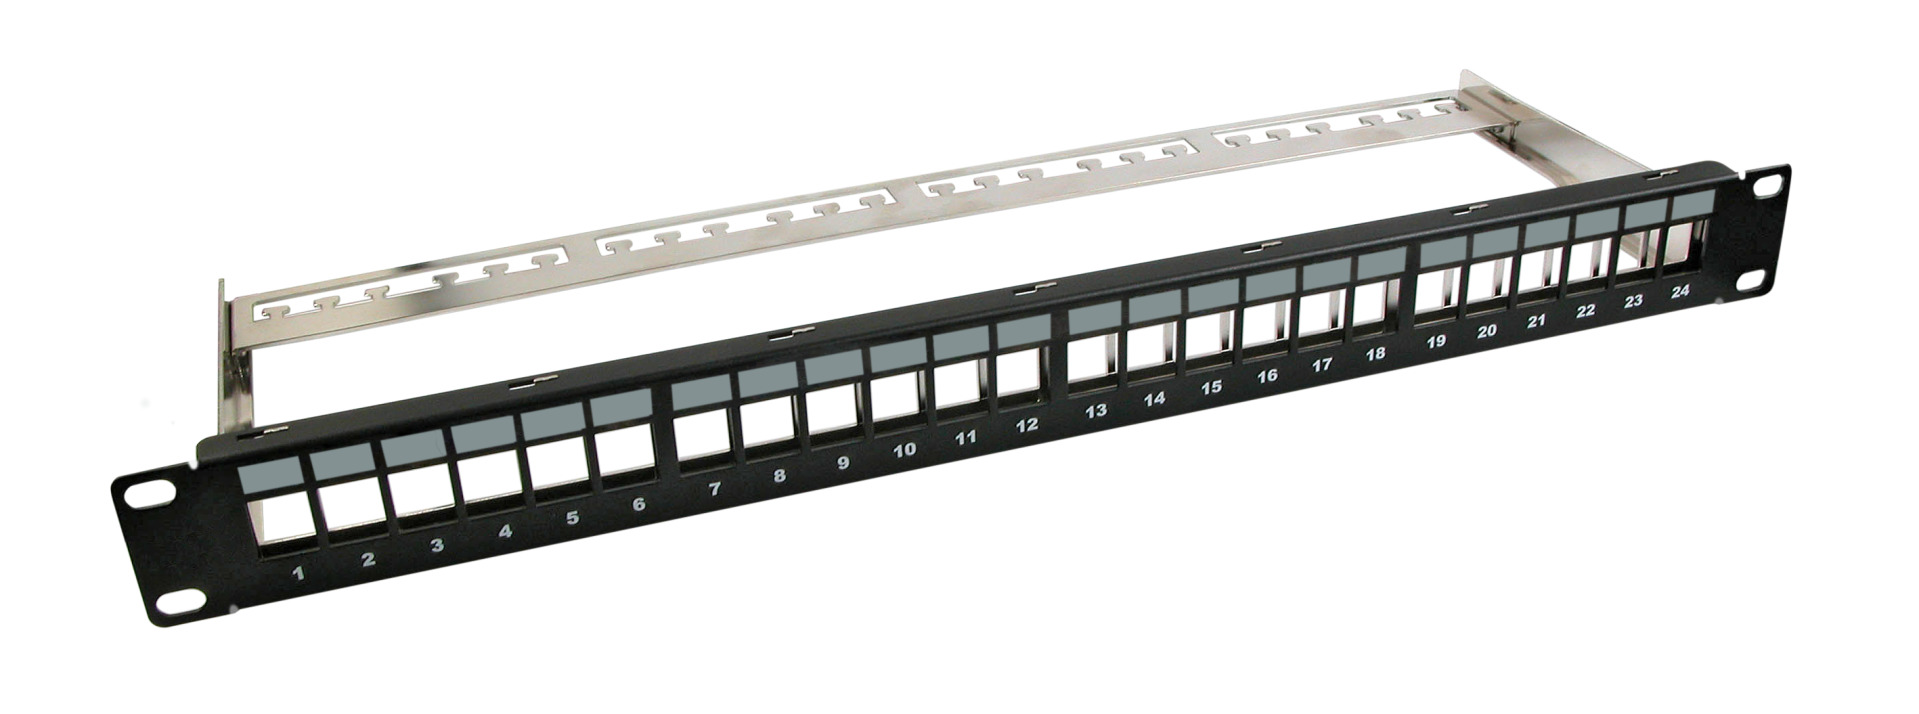 Distribution Panel 19" 1U, 24-Port, black RAL9005